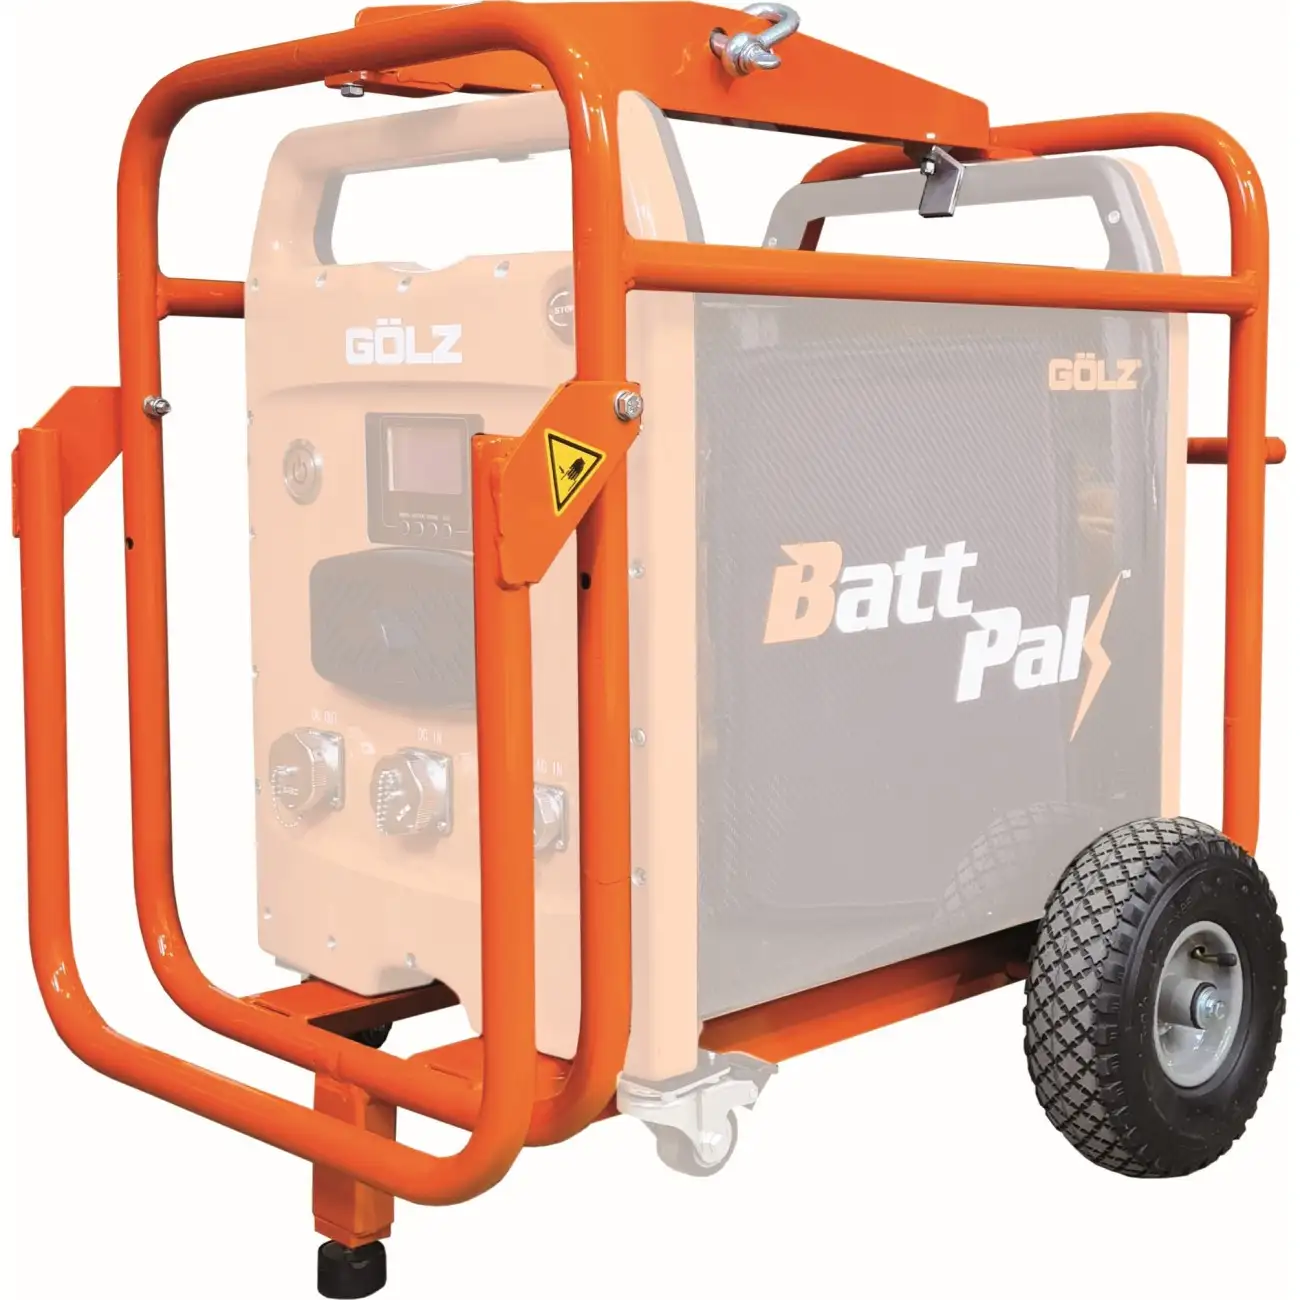 Golz BattPak Protective Transport Trolley